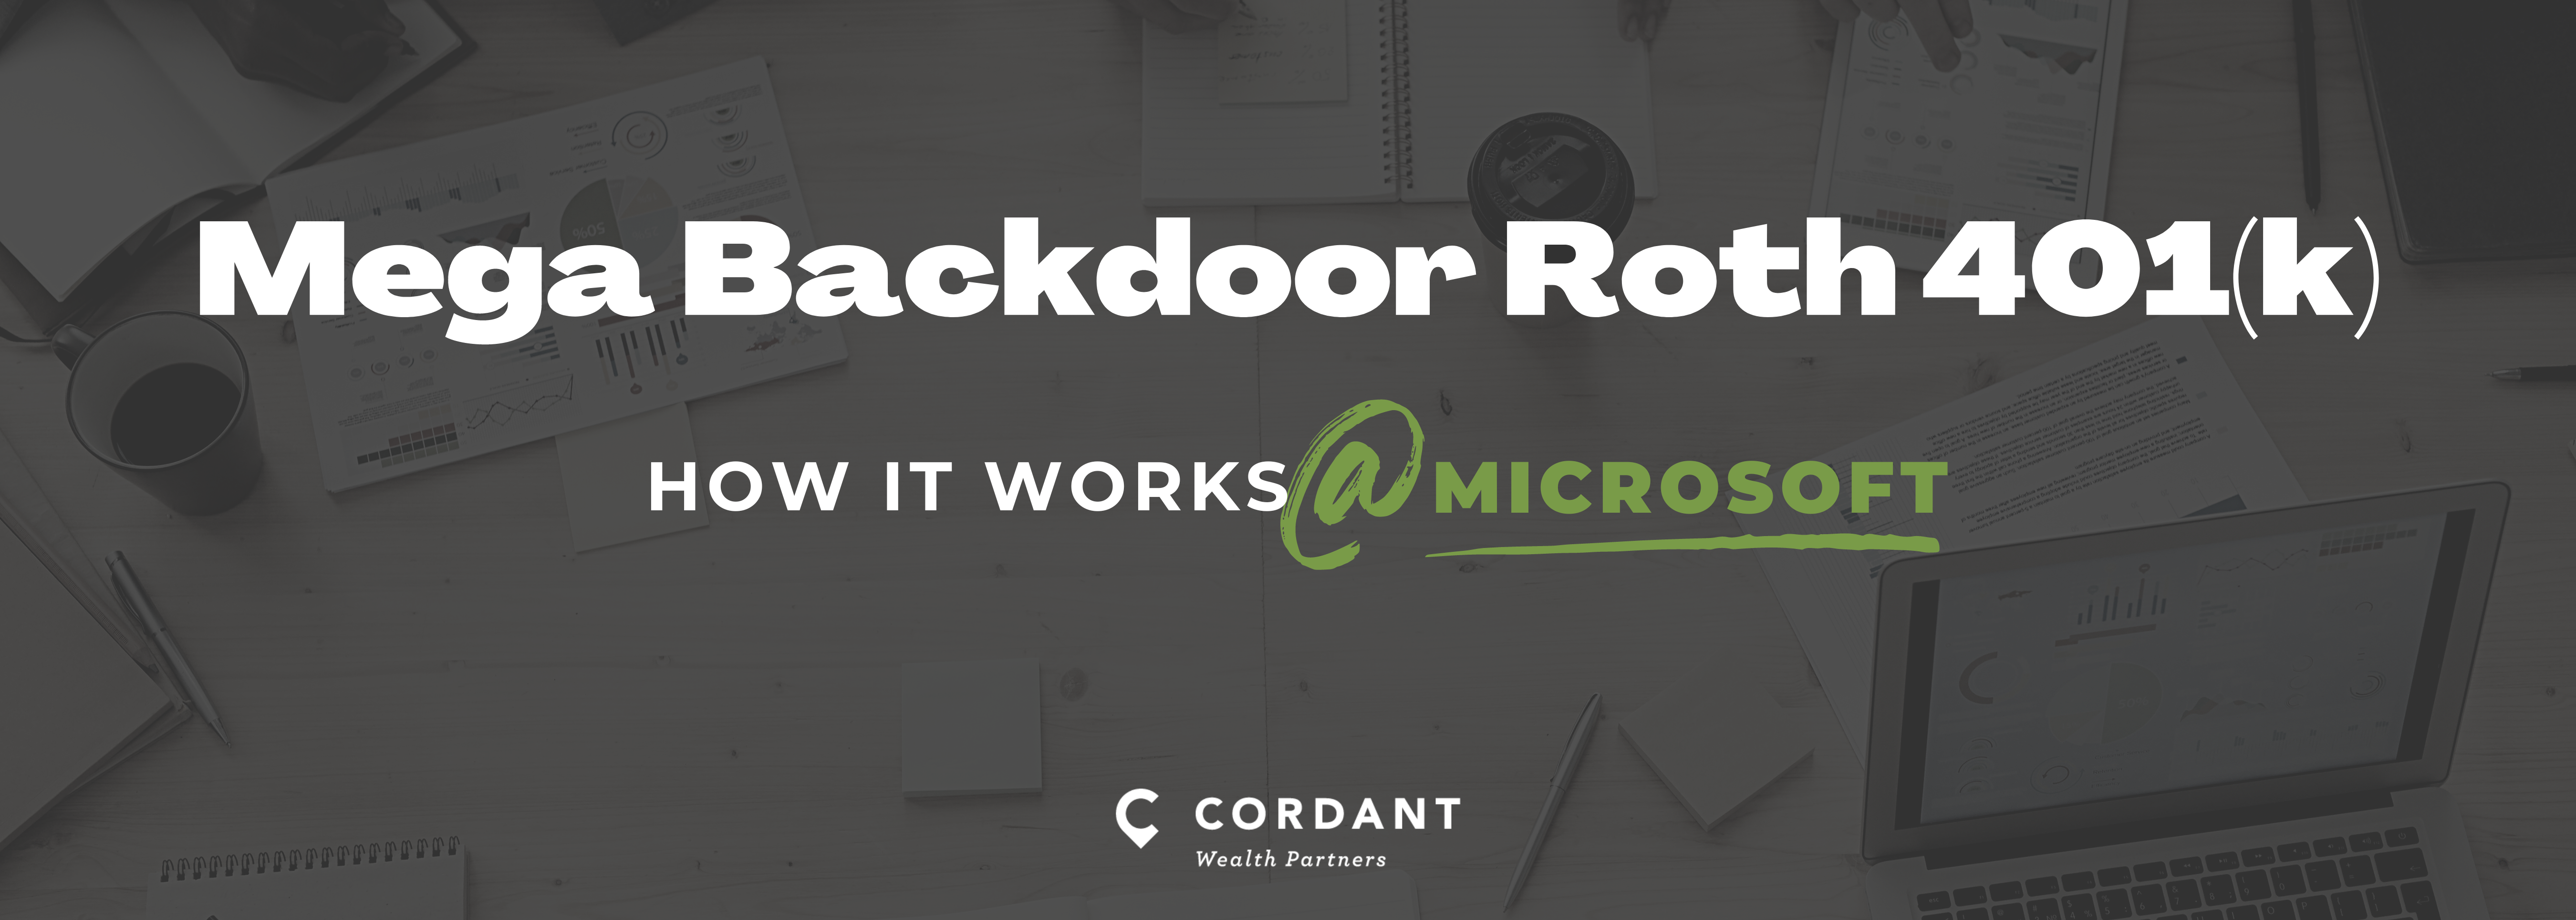 Microsoft 401k Mega Backdoor Roth Conversion: How it Works